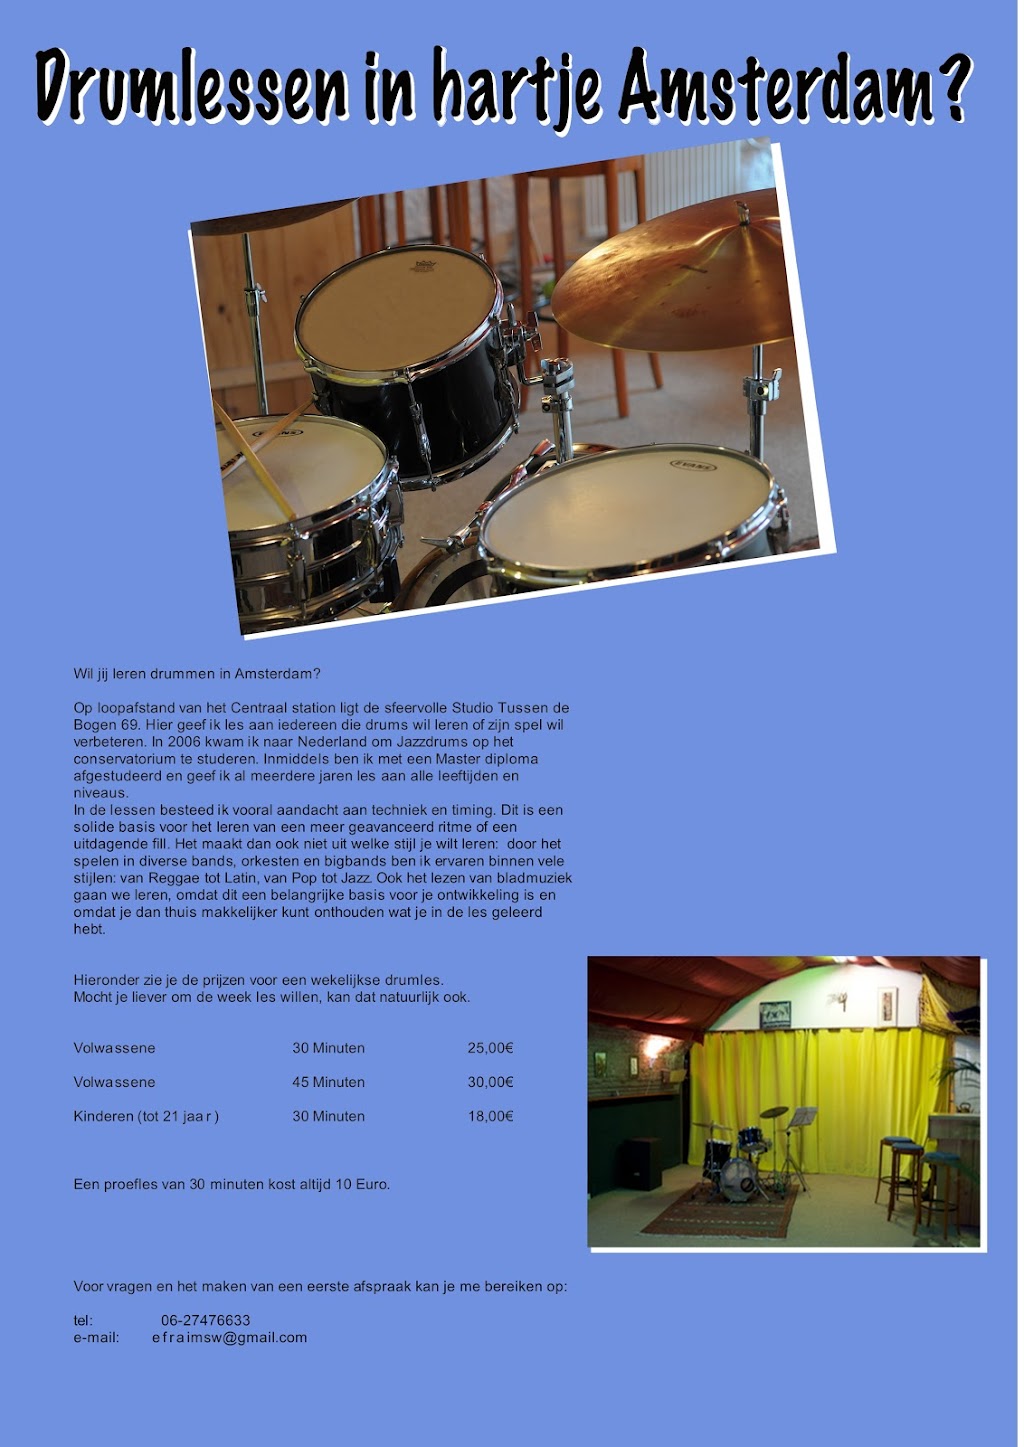 Drum lessons | Tussen de Bogen 69, 1013 JB Amsterdam, Netherlands | Phone: 06 27476633